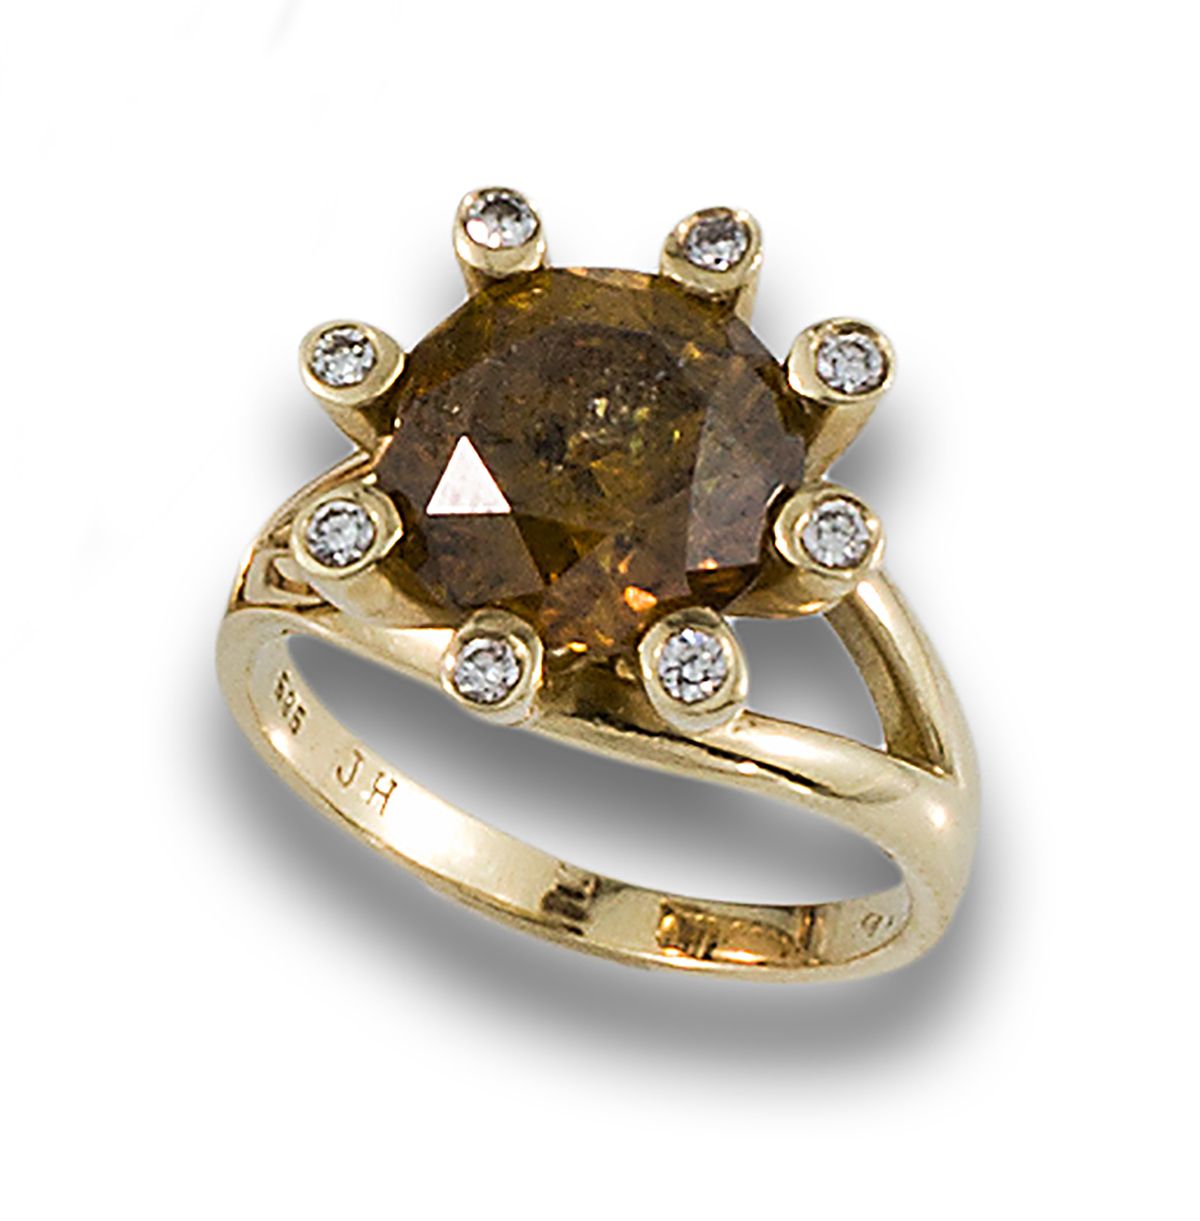 247 SORTIJA ORO DIAMANTE TRATADO247 GOLD DIAMOND RING TREATED 18kt yellow gold r&hellip;